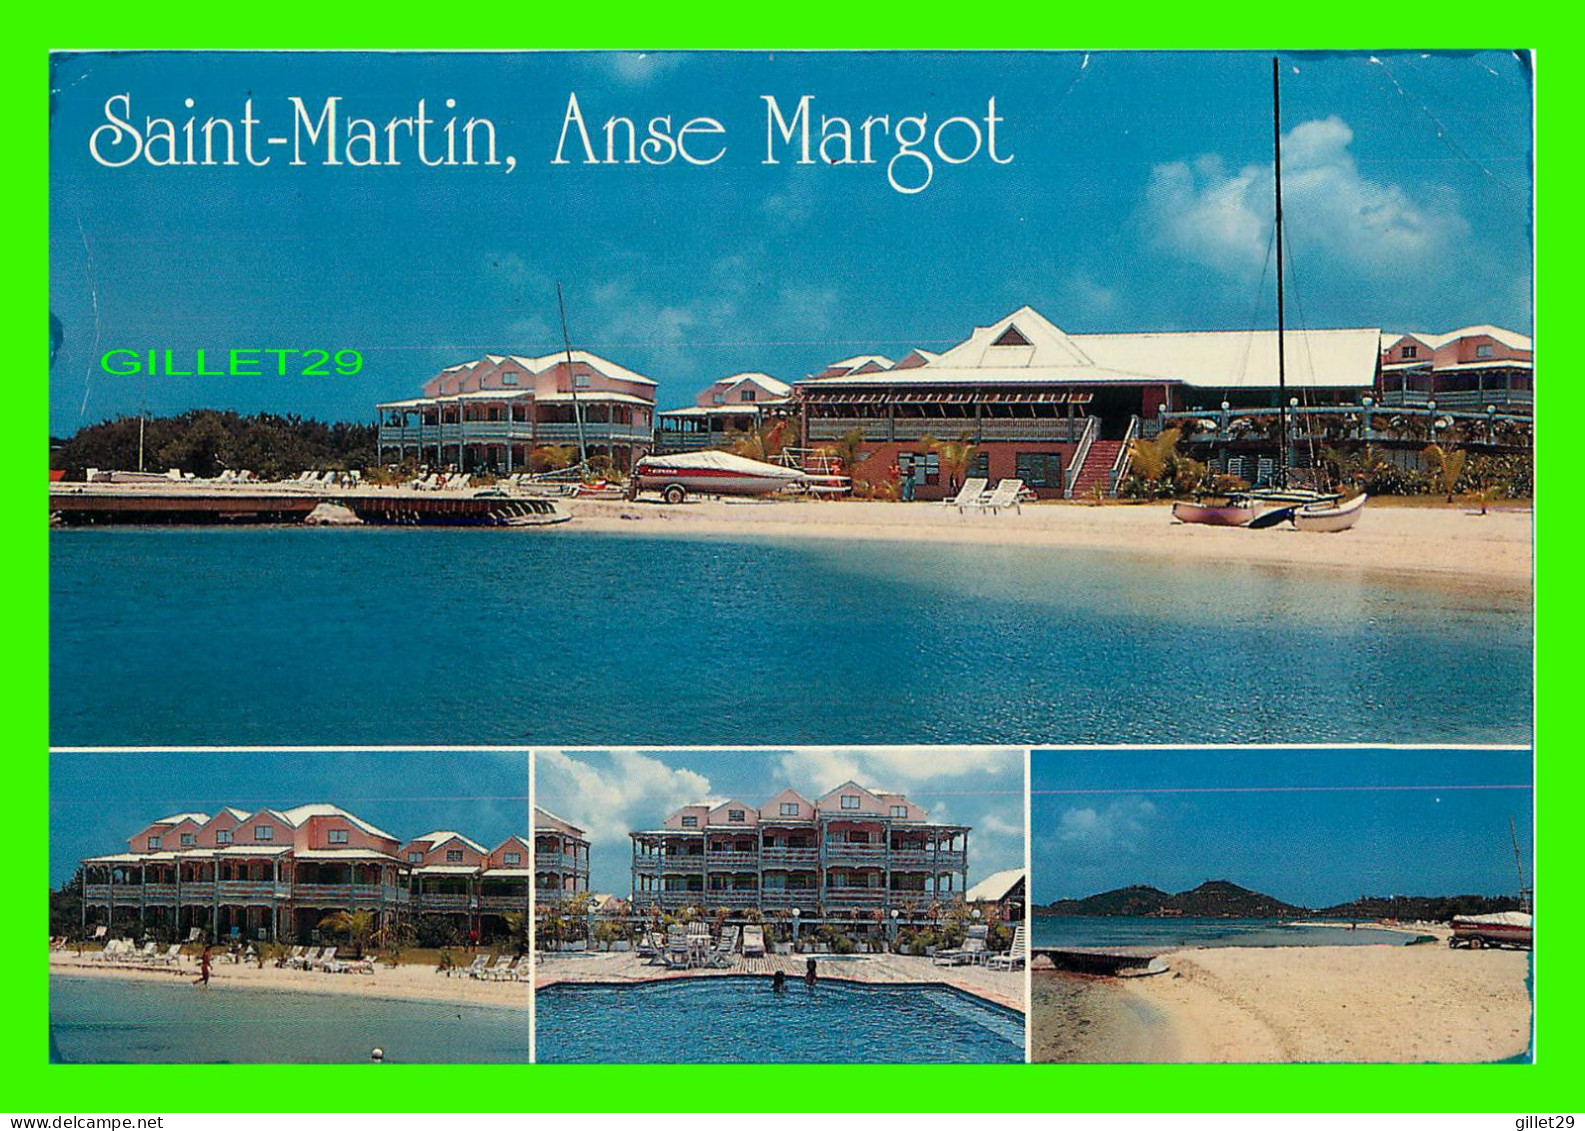 SAINT-MARTIN, QUADELOUPE - ANSE MARGOT - 4 MULTIVUES - CIRCULÉE EN 1994 - EDITIONS EXBRAYAT - - Saint Martin